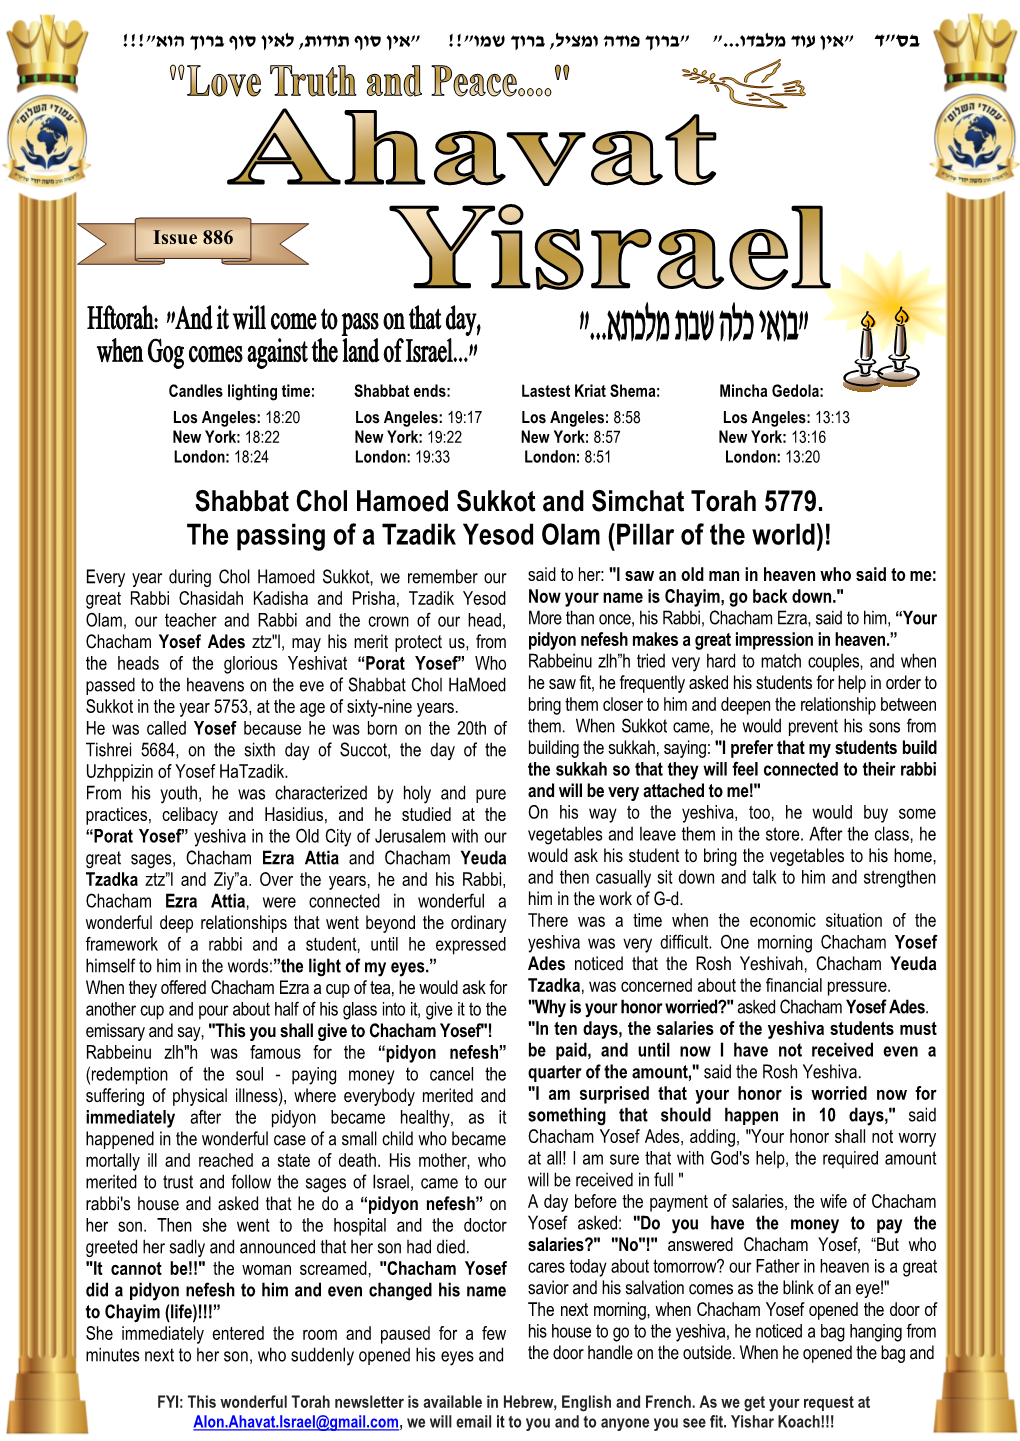 Shabbat Chol Hamoed Sukkot and Simchat Torah 5779. the Passing of a Tzadik Yesod Olam (Pillar of the World)!